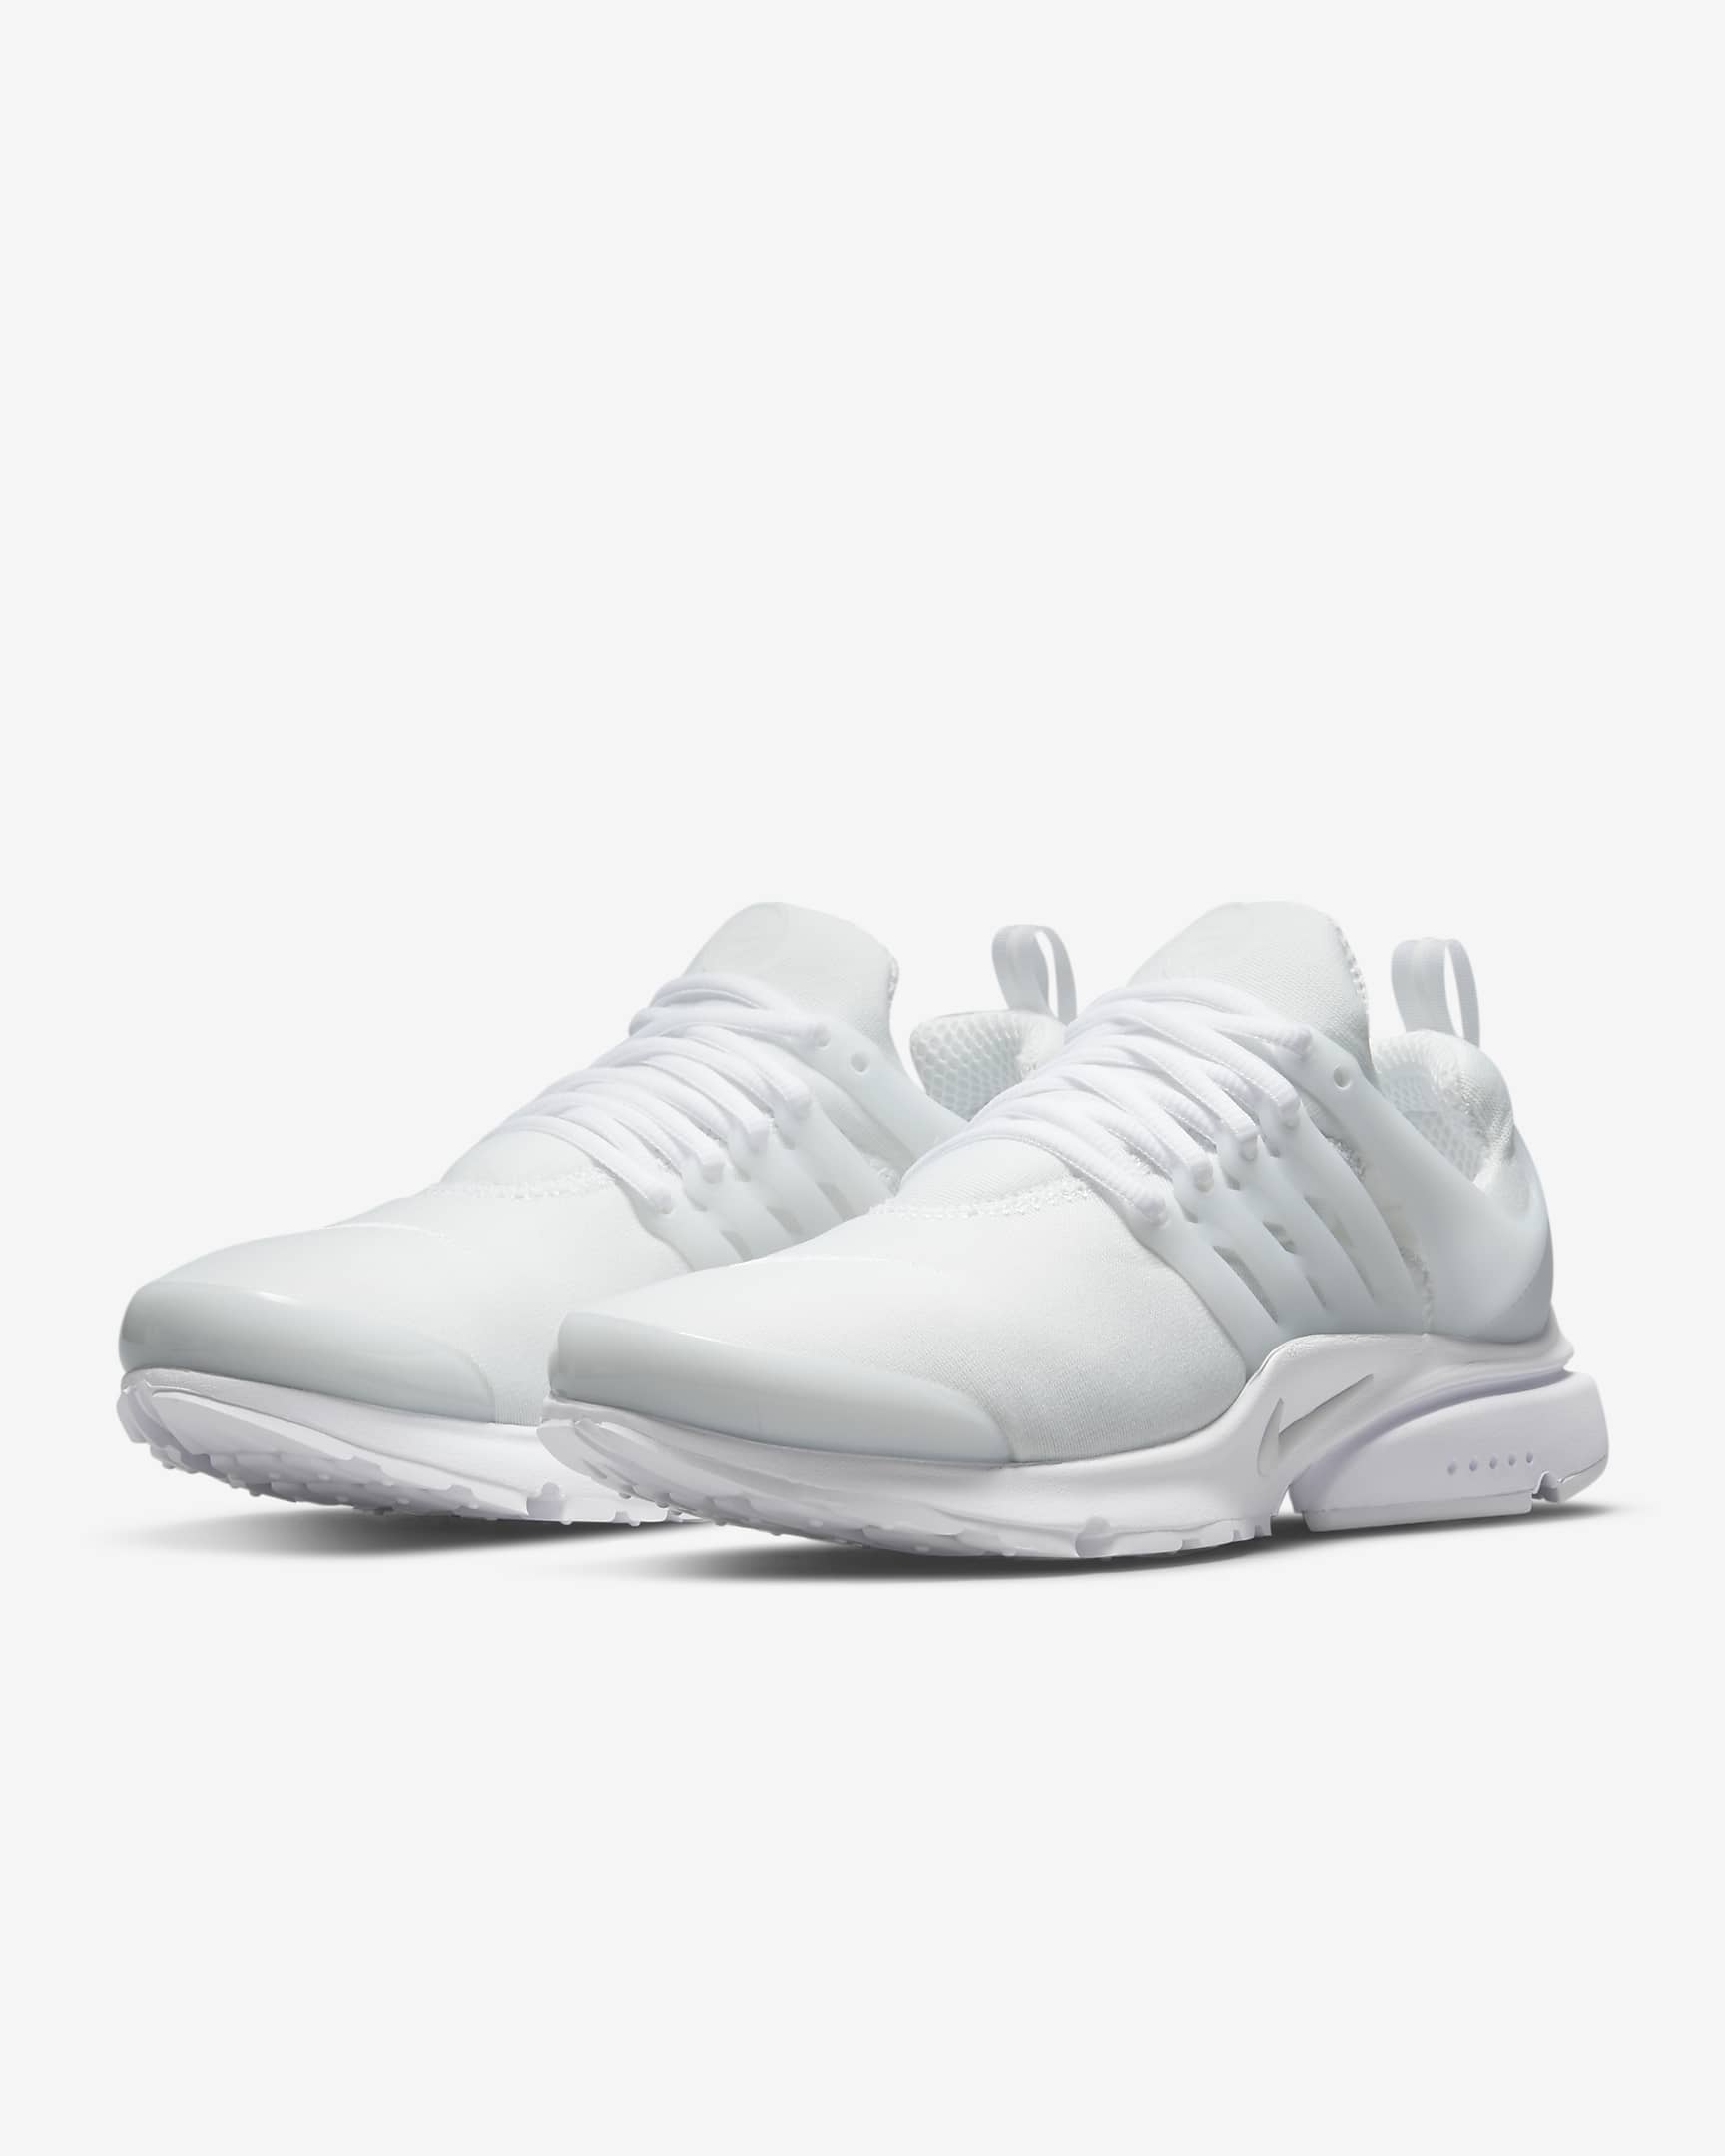 Nike Air Presto férficipő - Fehér/Pure Platinum